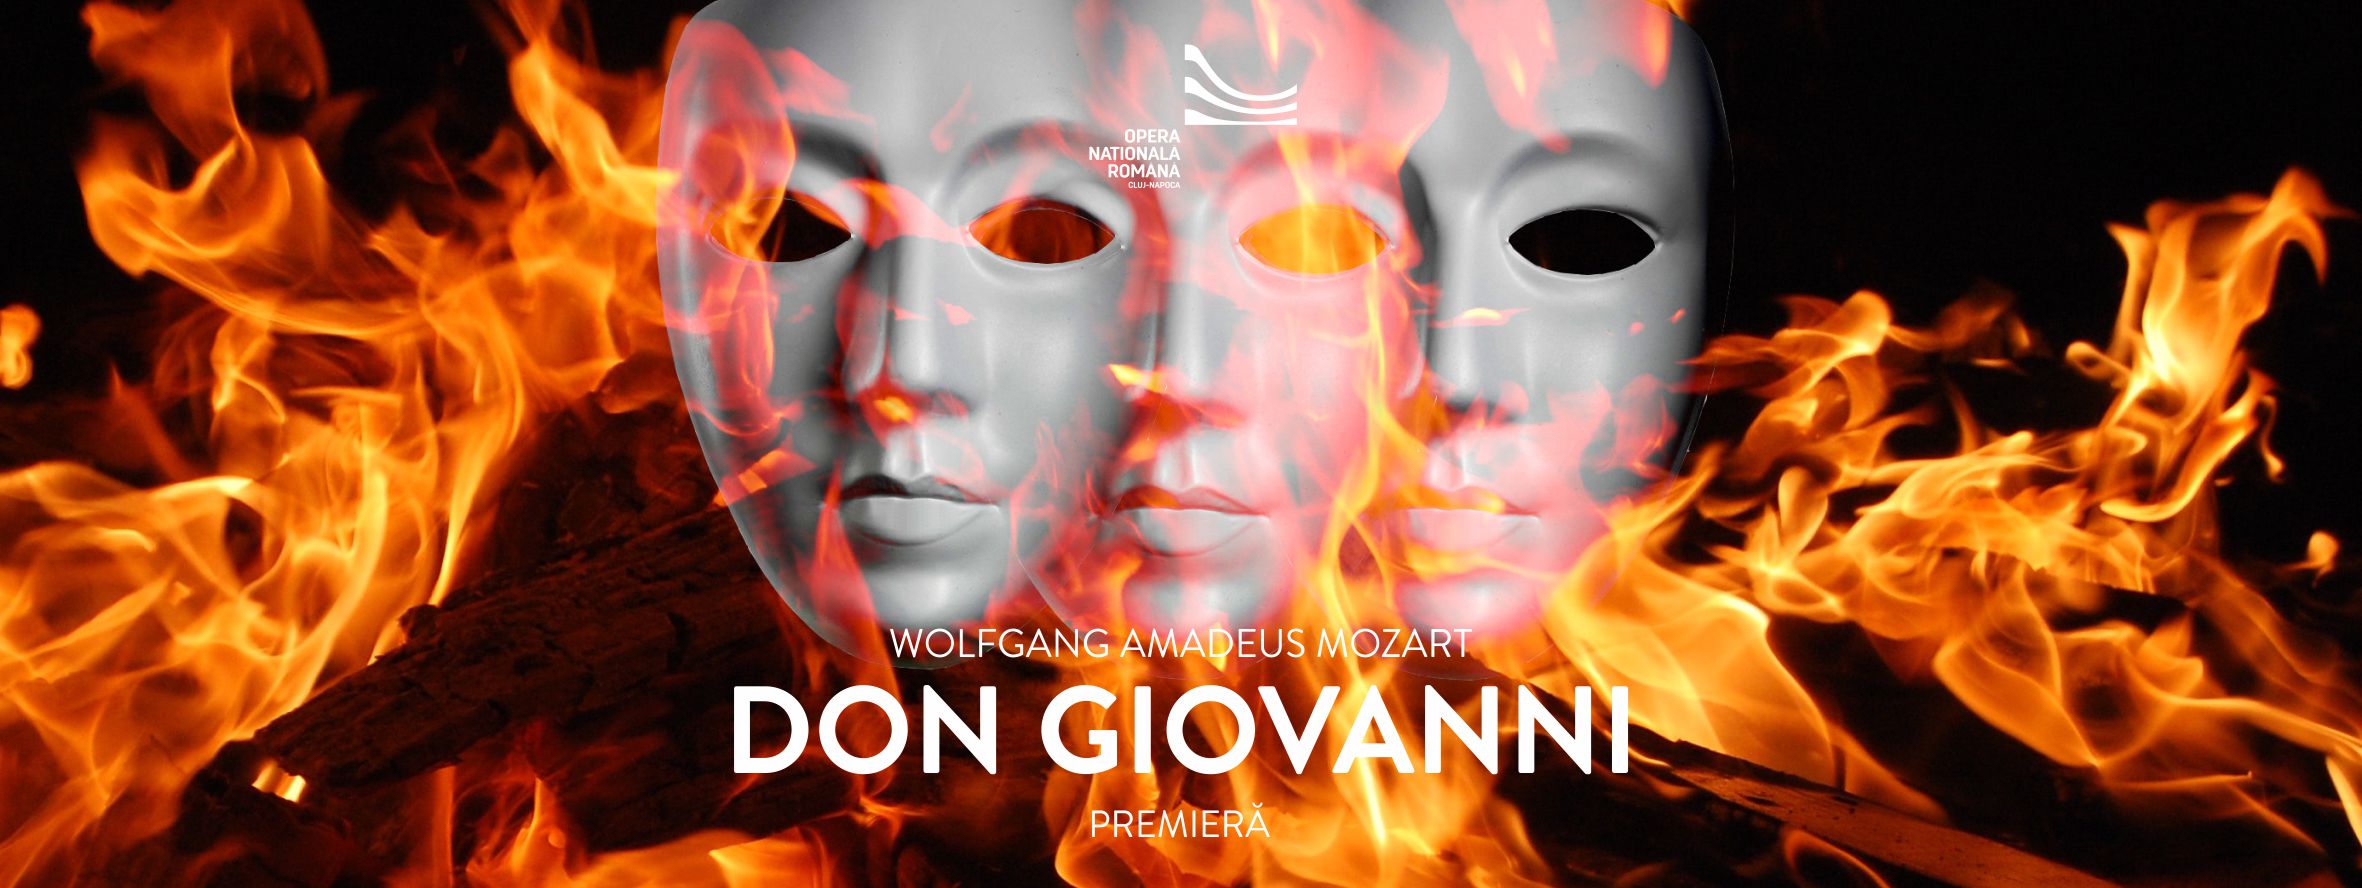 Don Giovanni - W. A. Mozart - Premieră